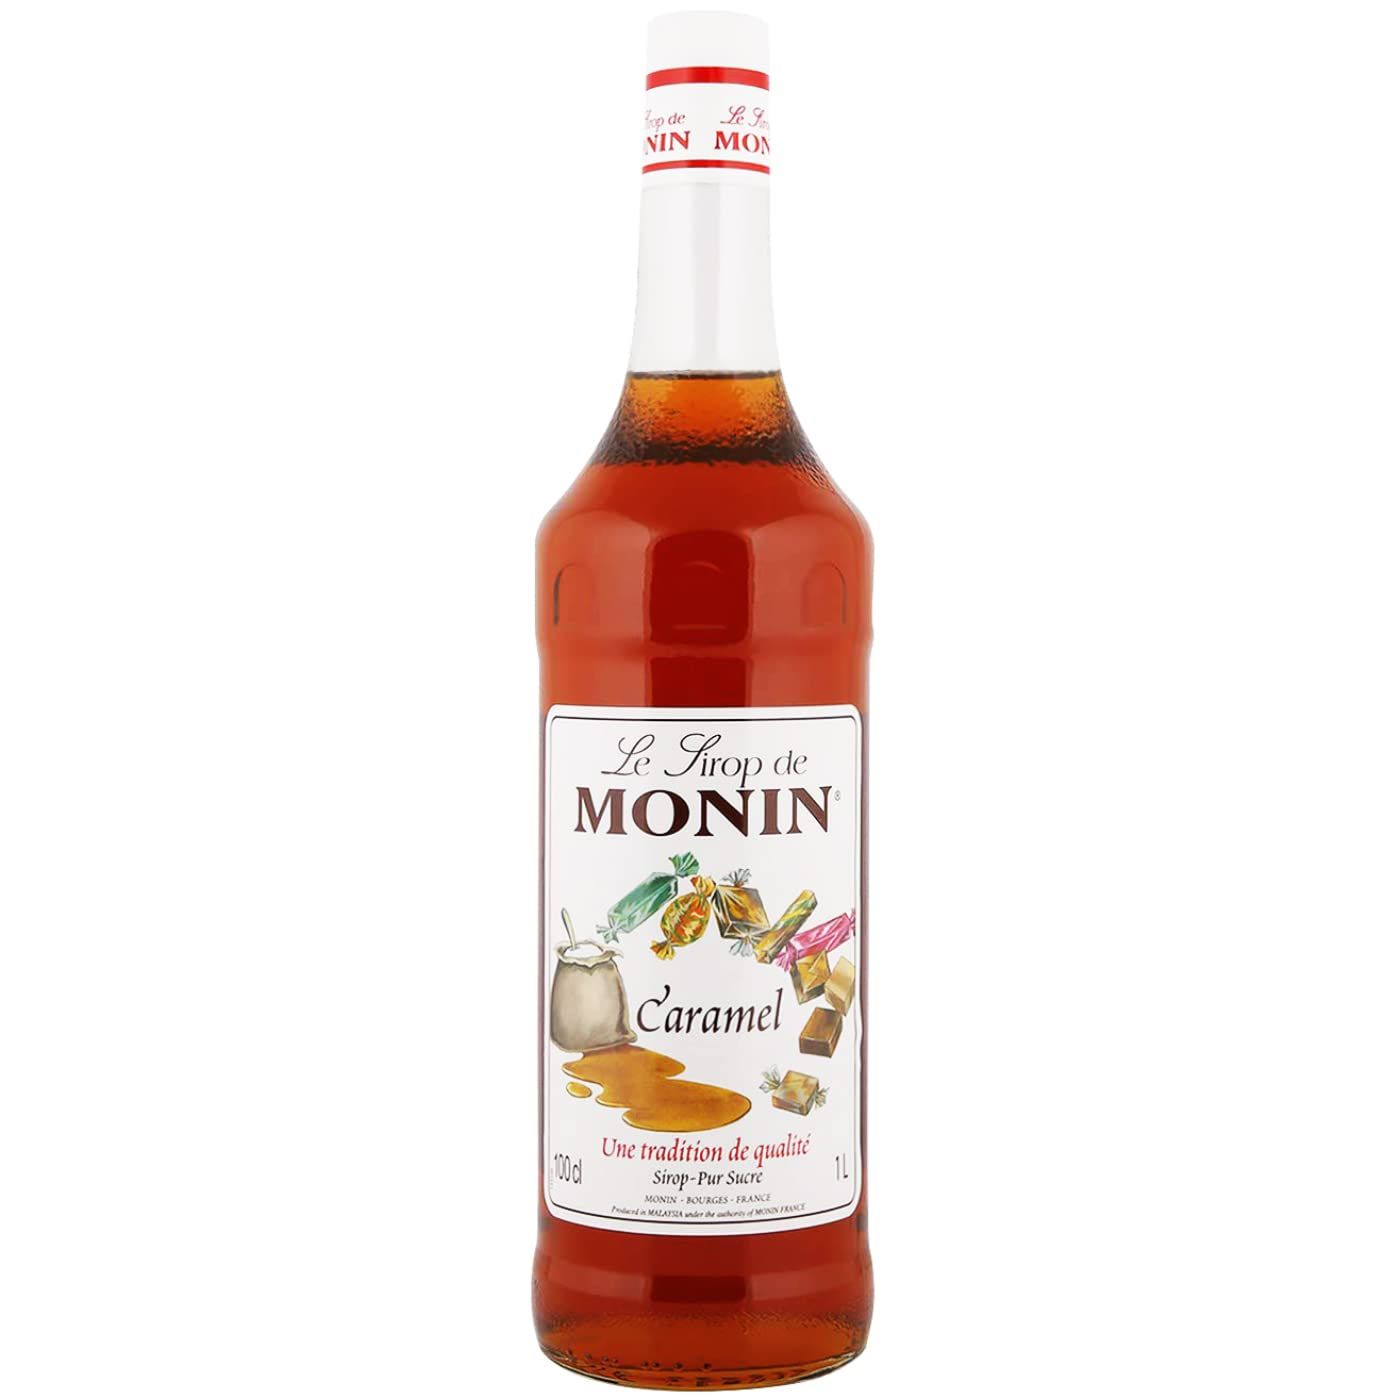 Monin Caramel Flavored Syrup Image